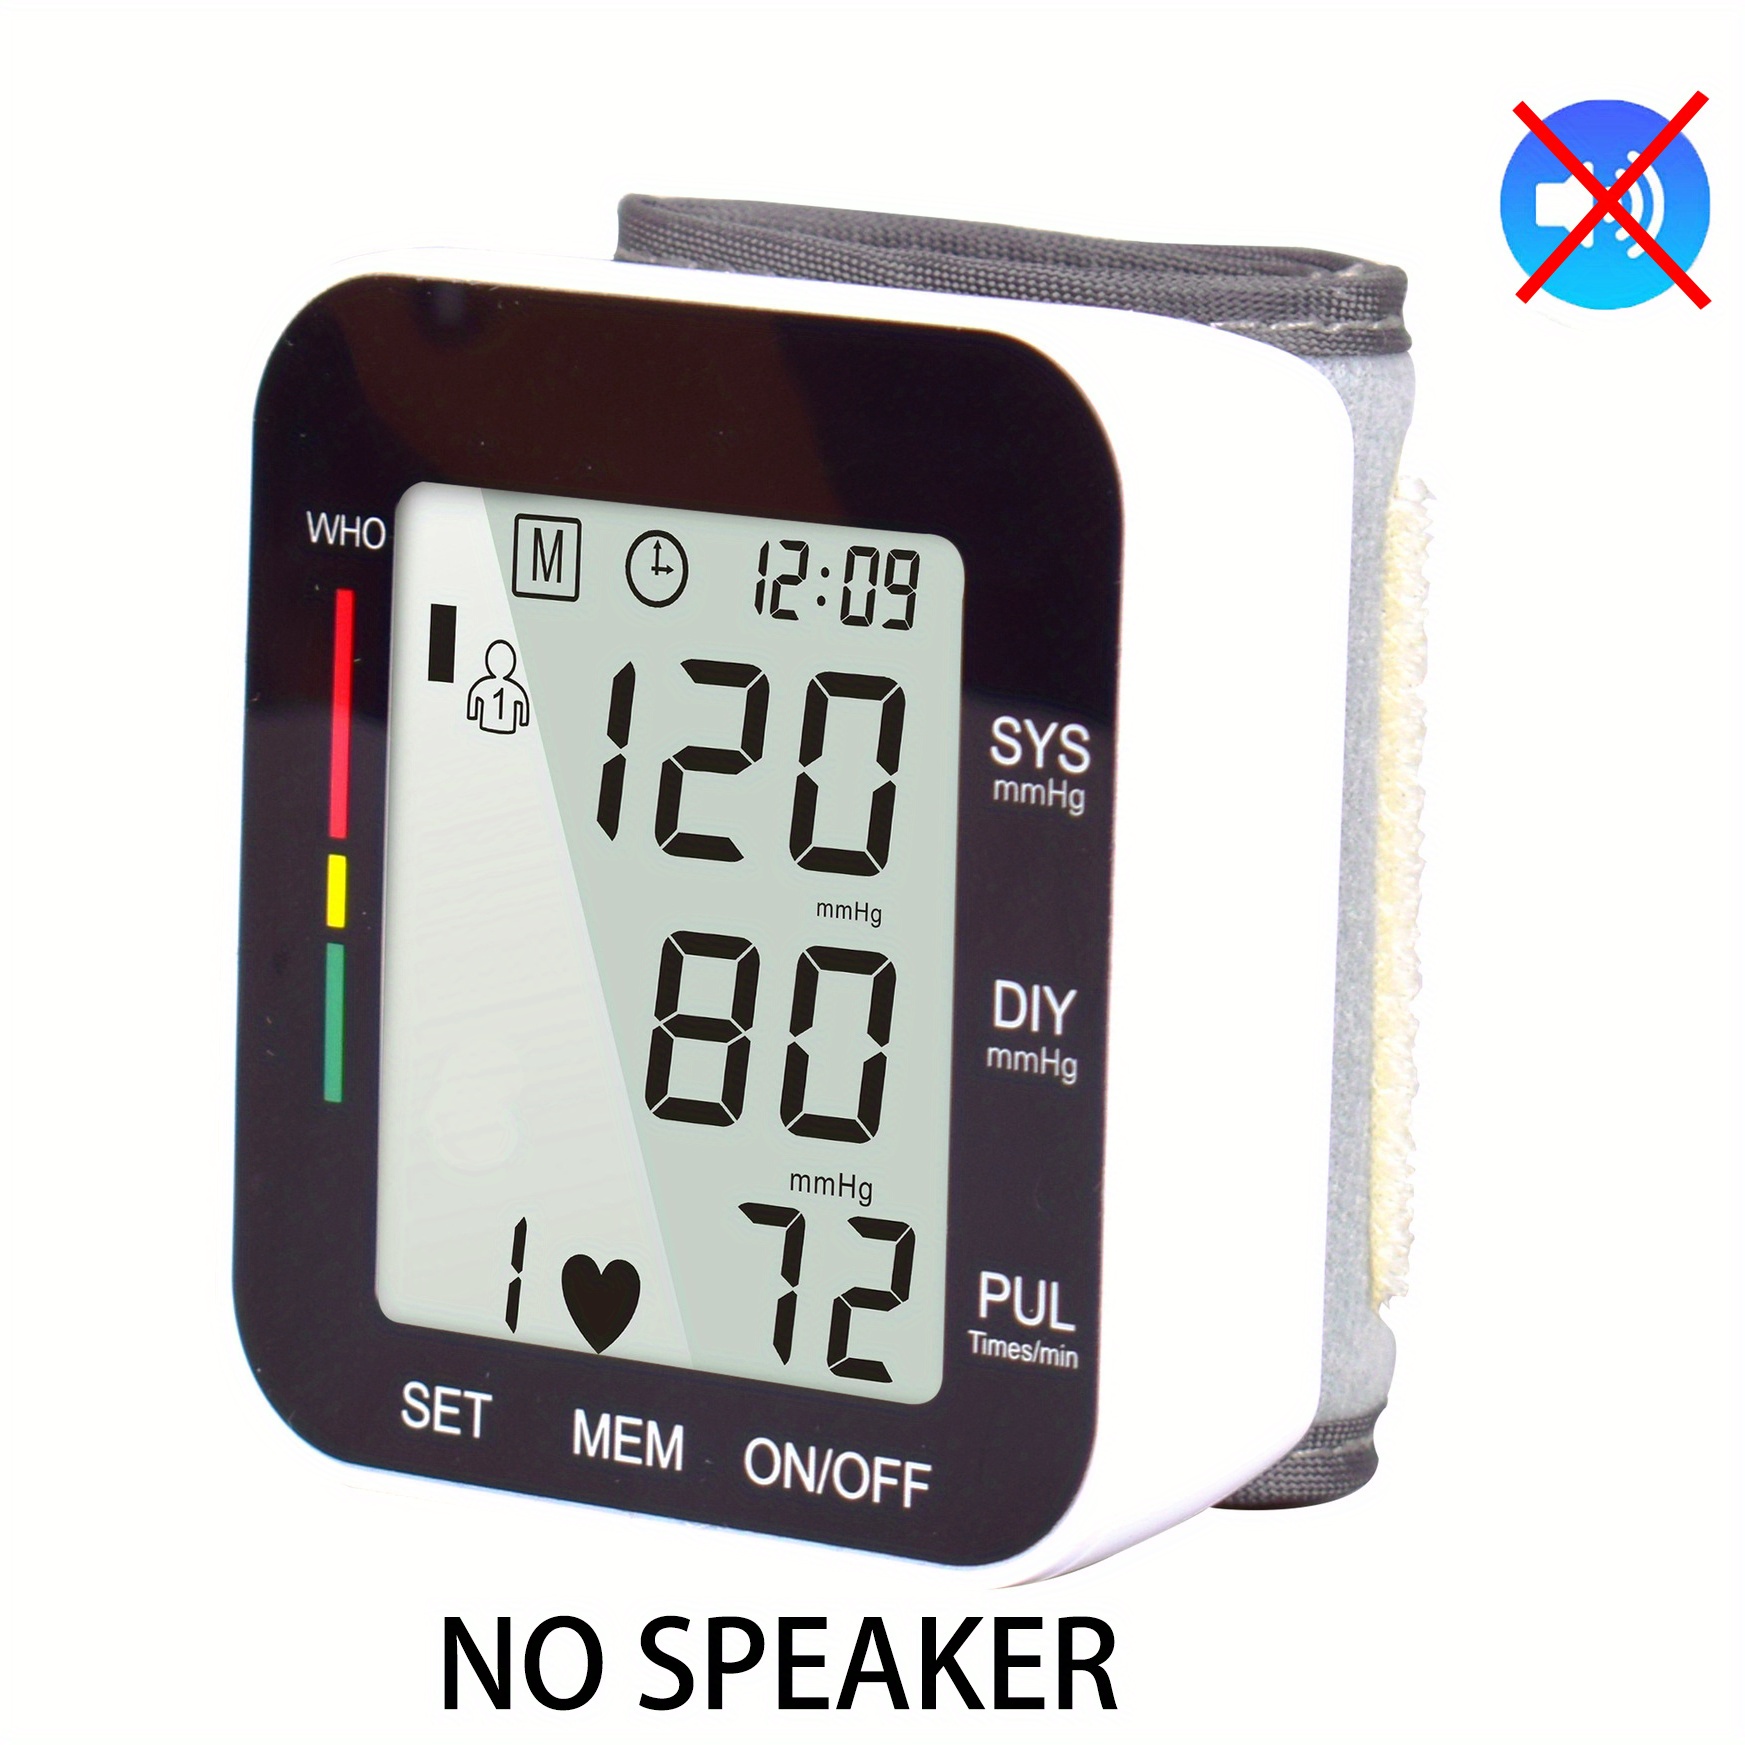 New Wrist Blood Pressure Monitor with Speaker, Blood Pressure